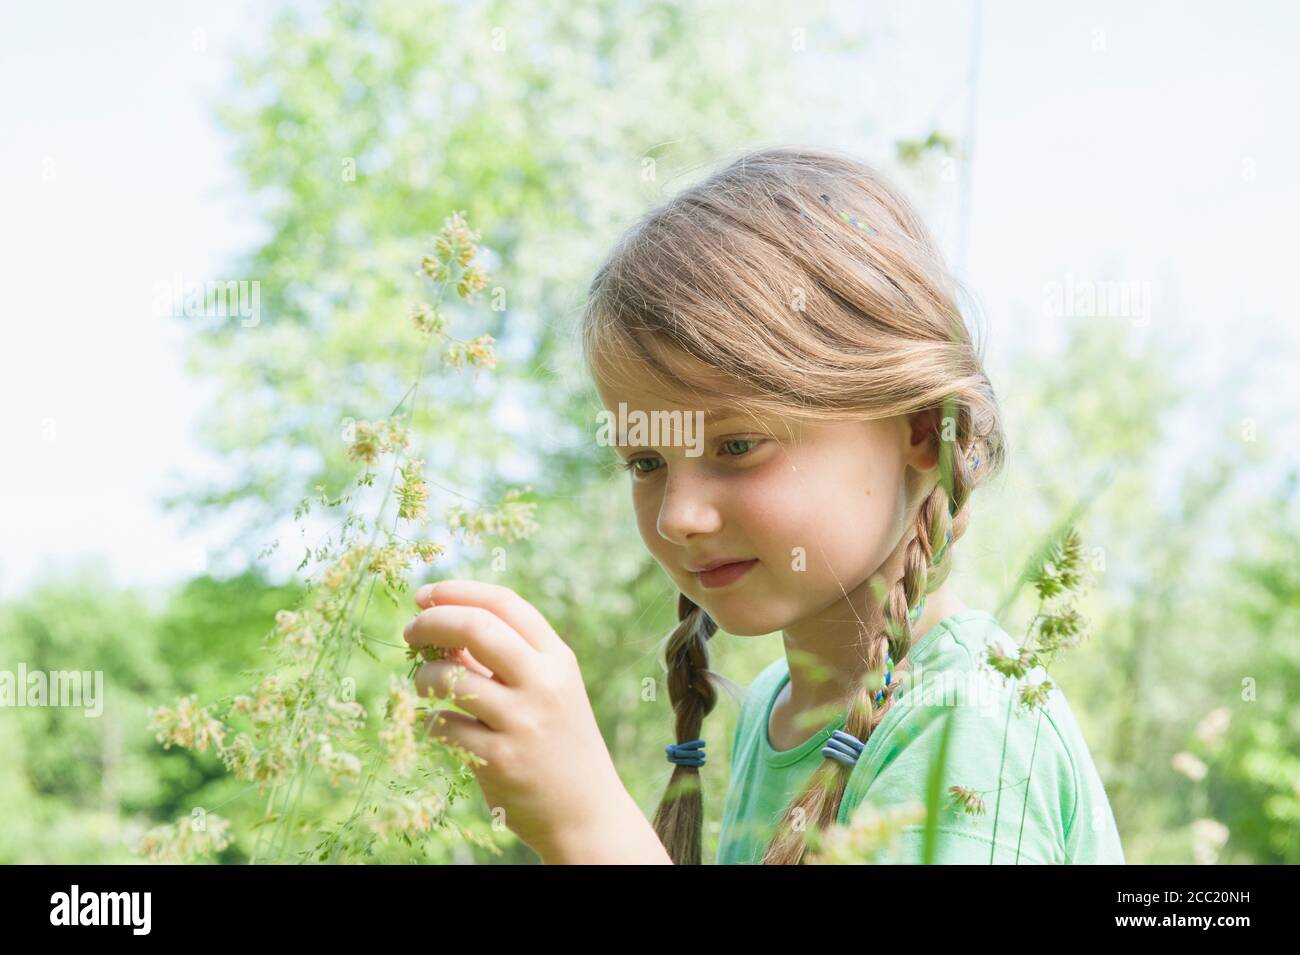 Germany, Bavaria, Munich, Girl holding flower, smiling Banque D'Images